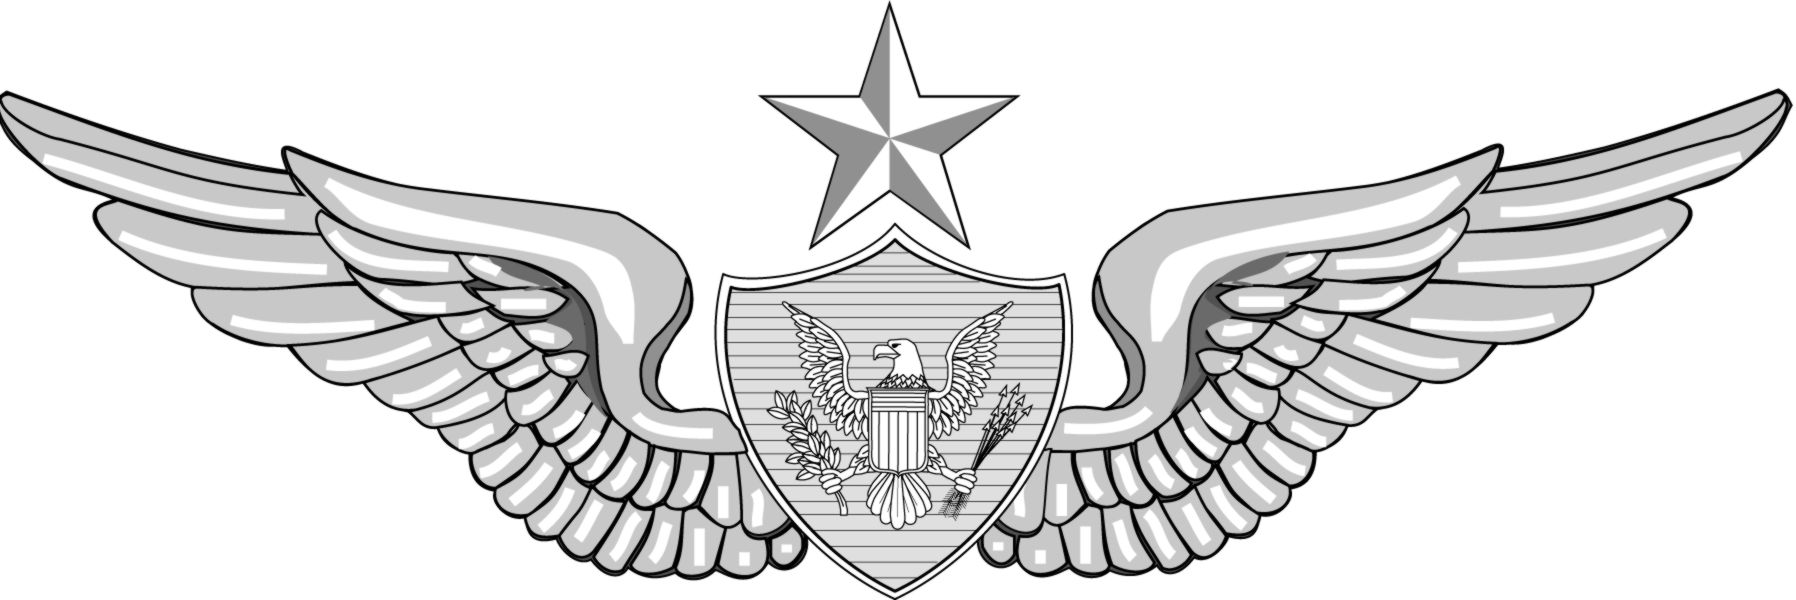 Military army clip art qualification badges 2 clipartix